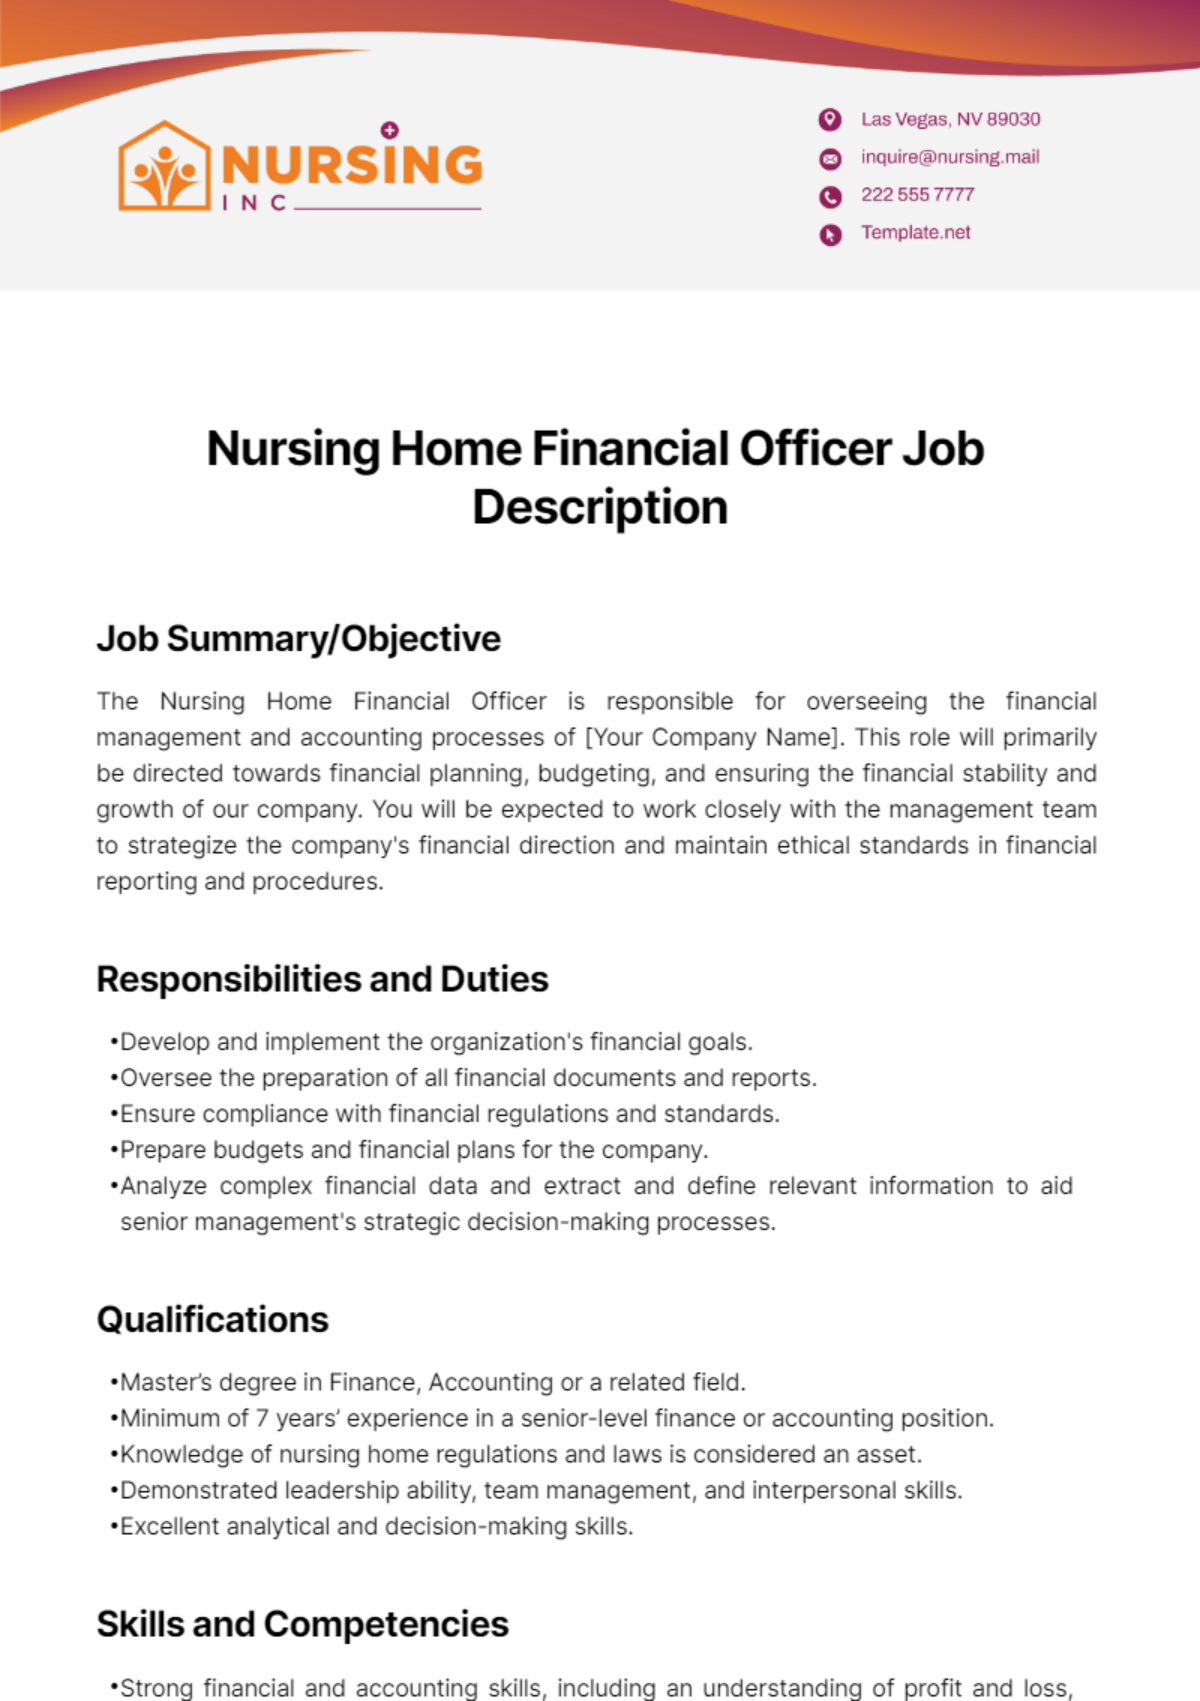 Nursing Home Financial Officer Job Description Template